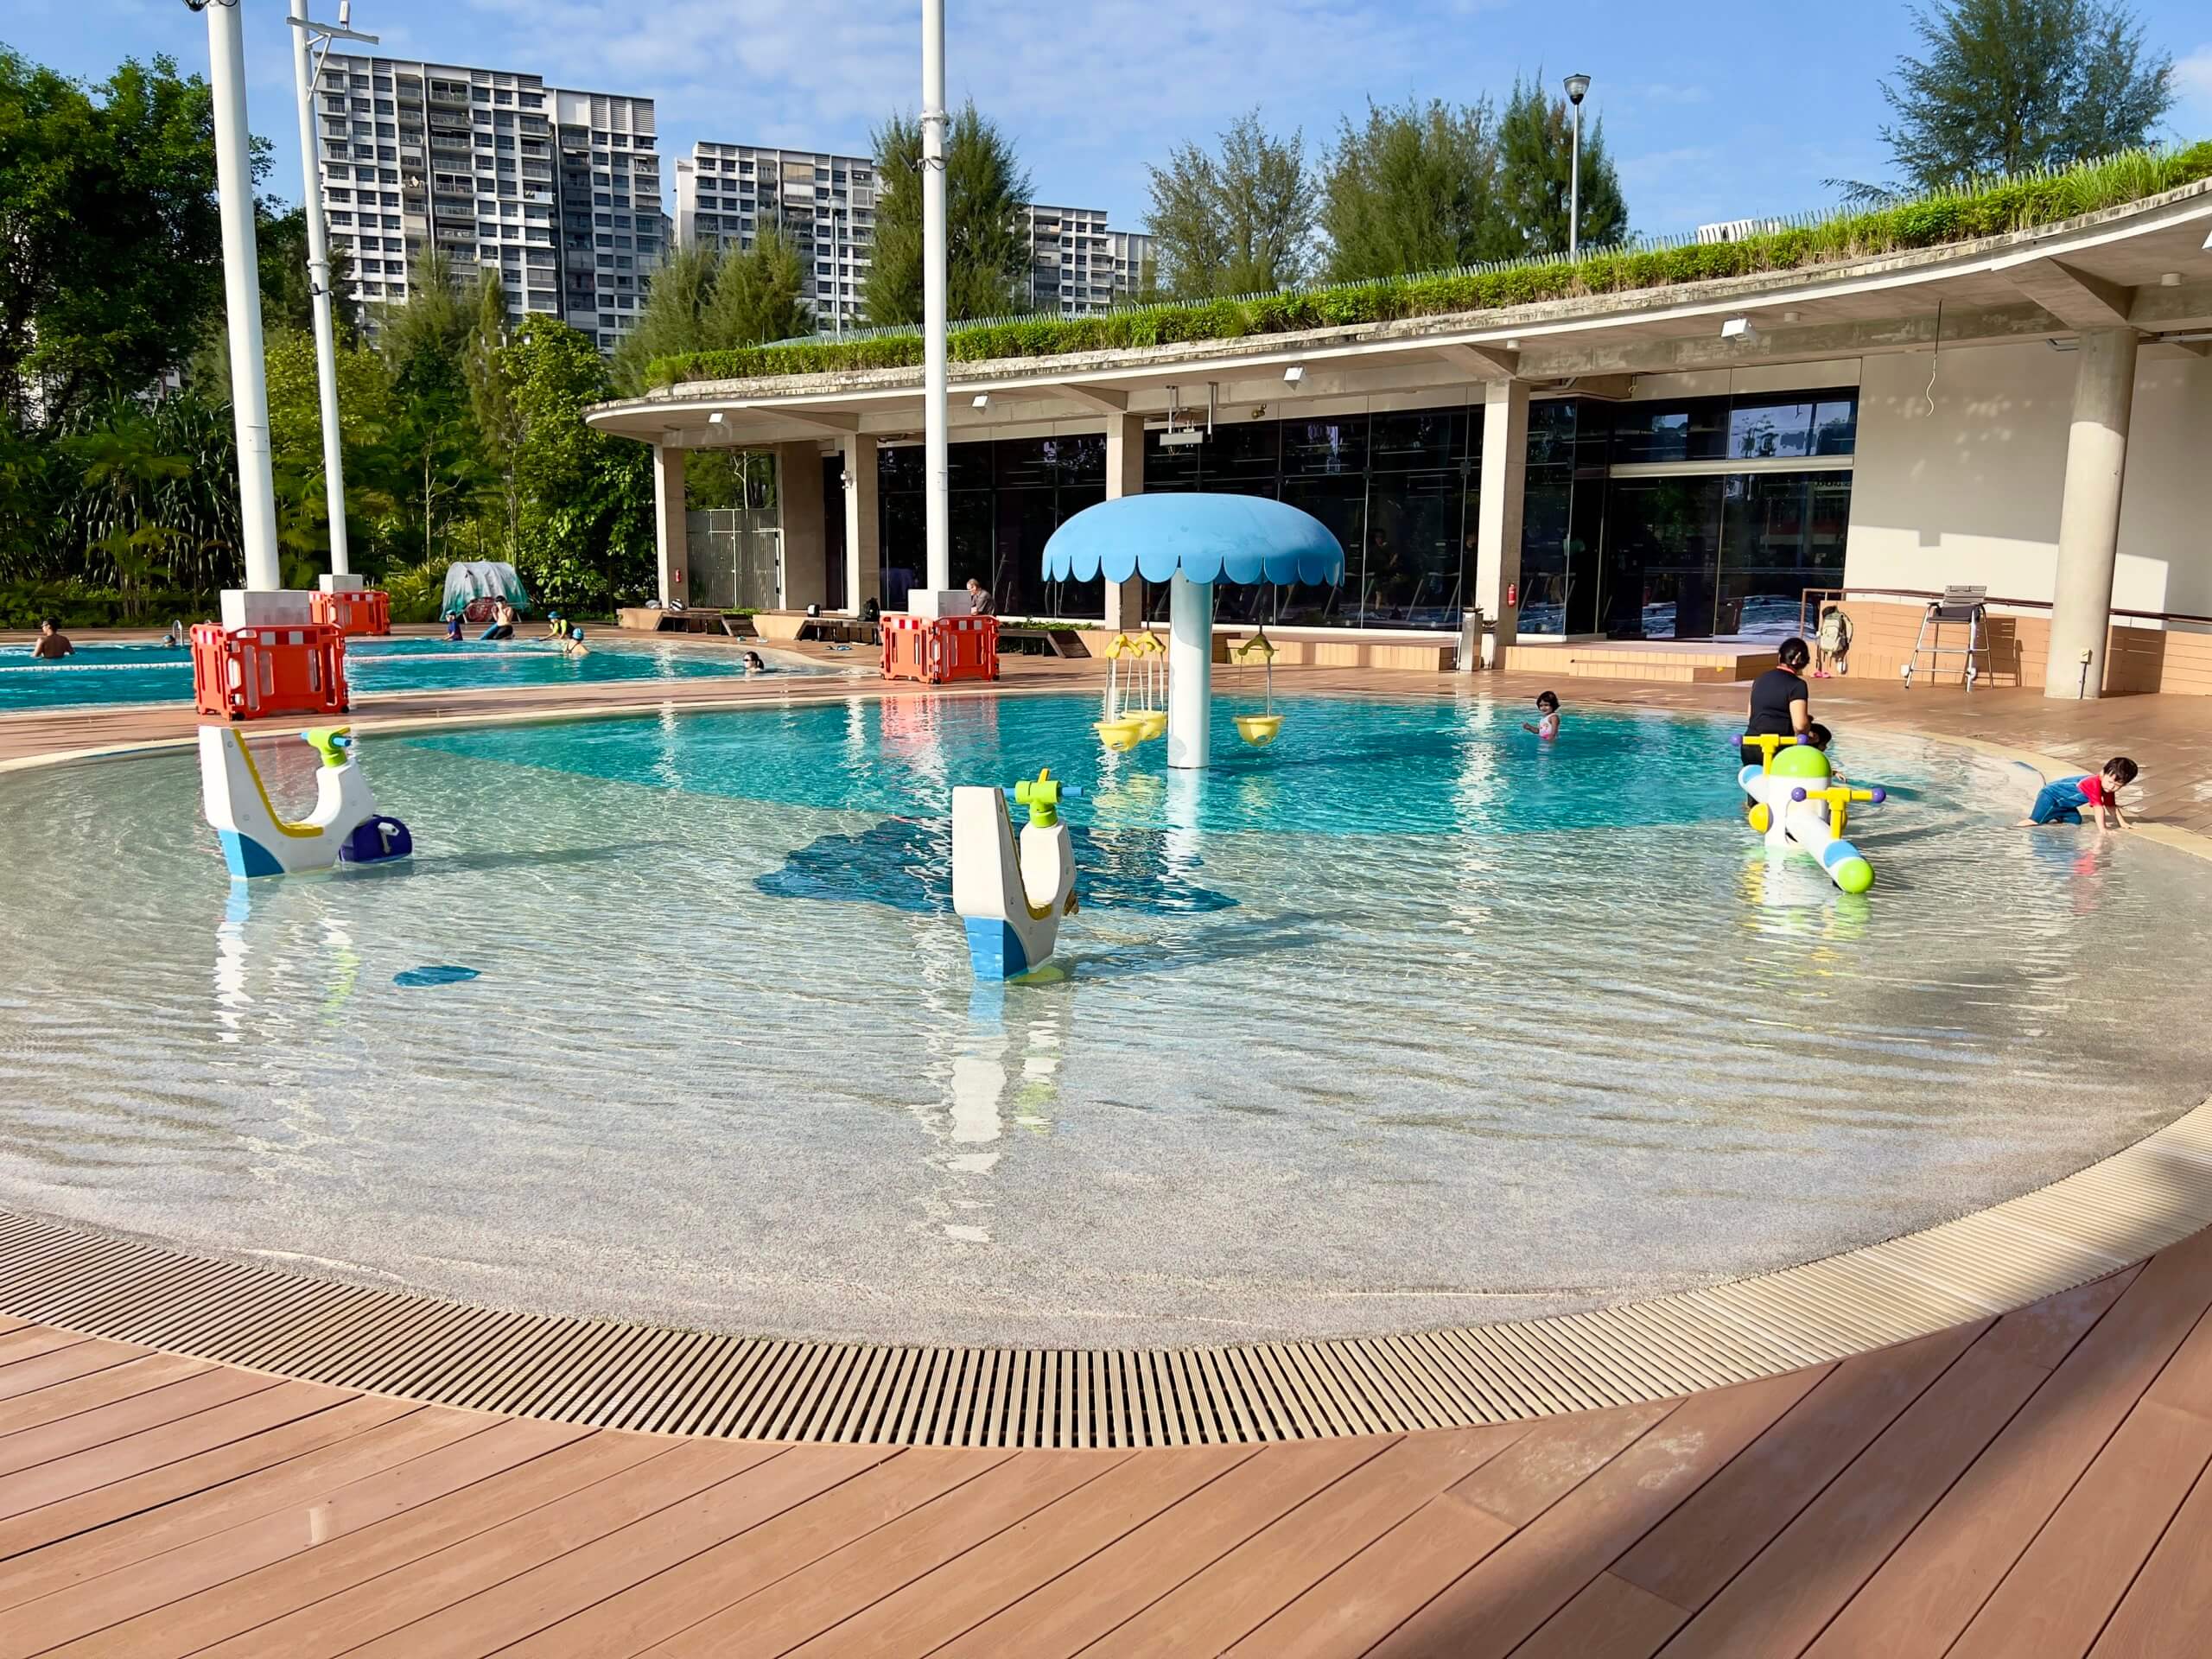 Jurong Lake Gardens Swimming Complex